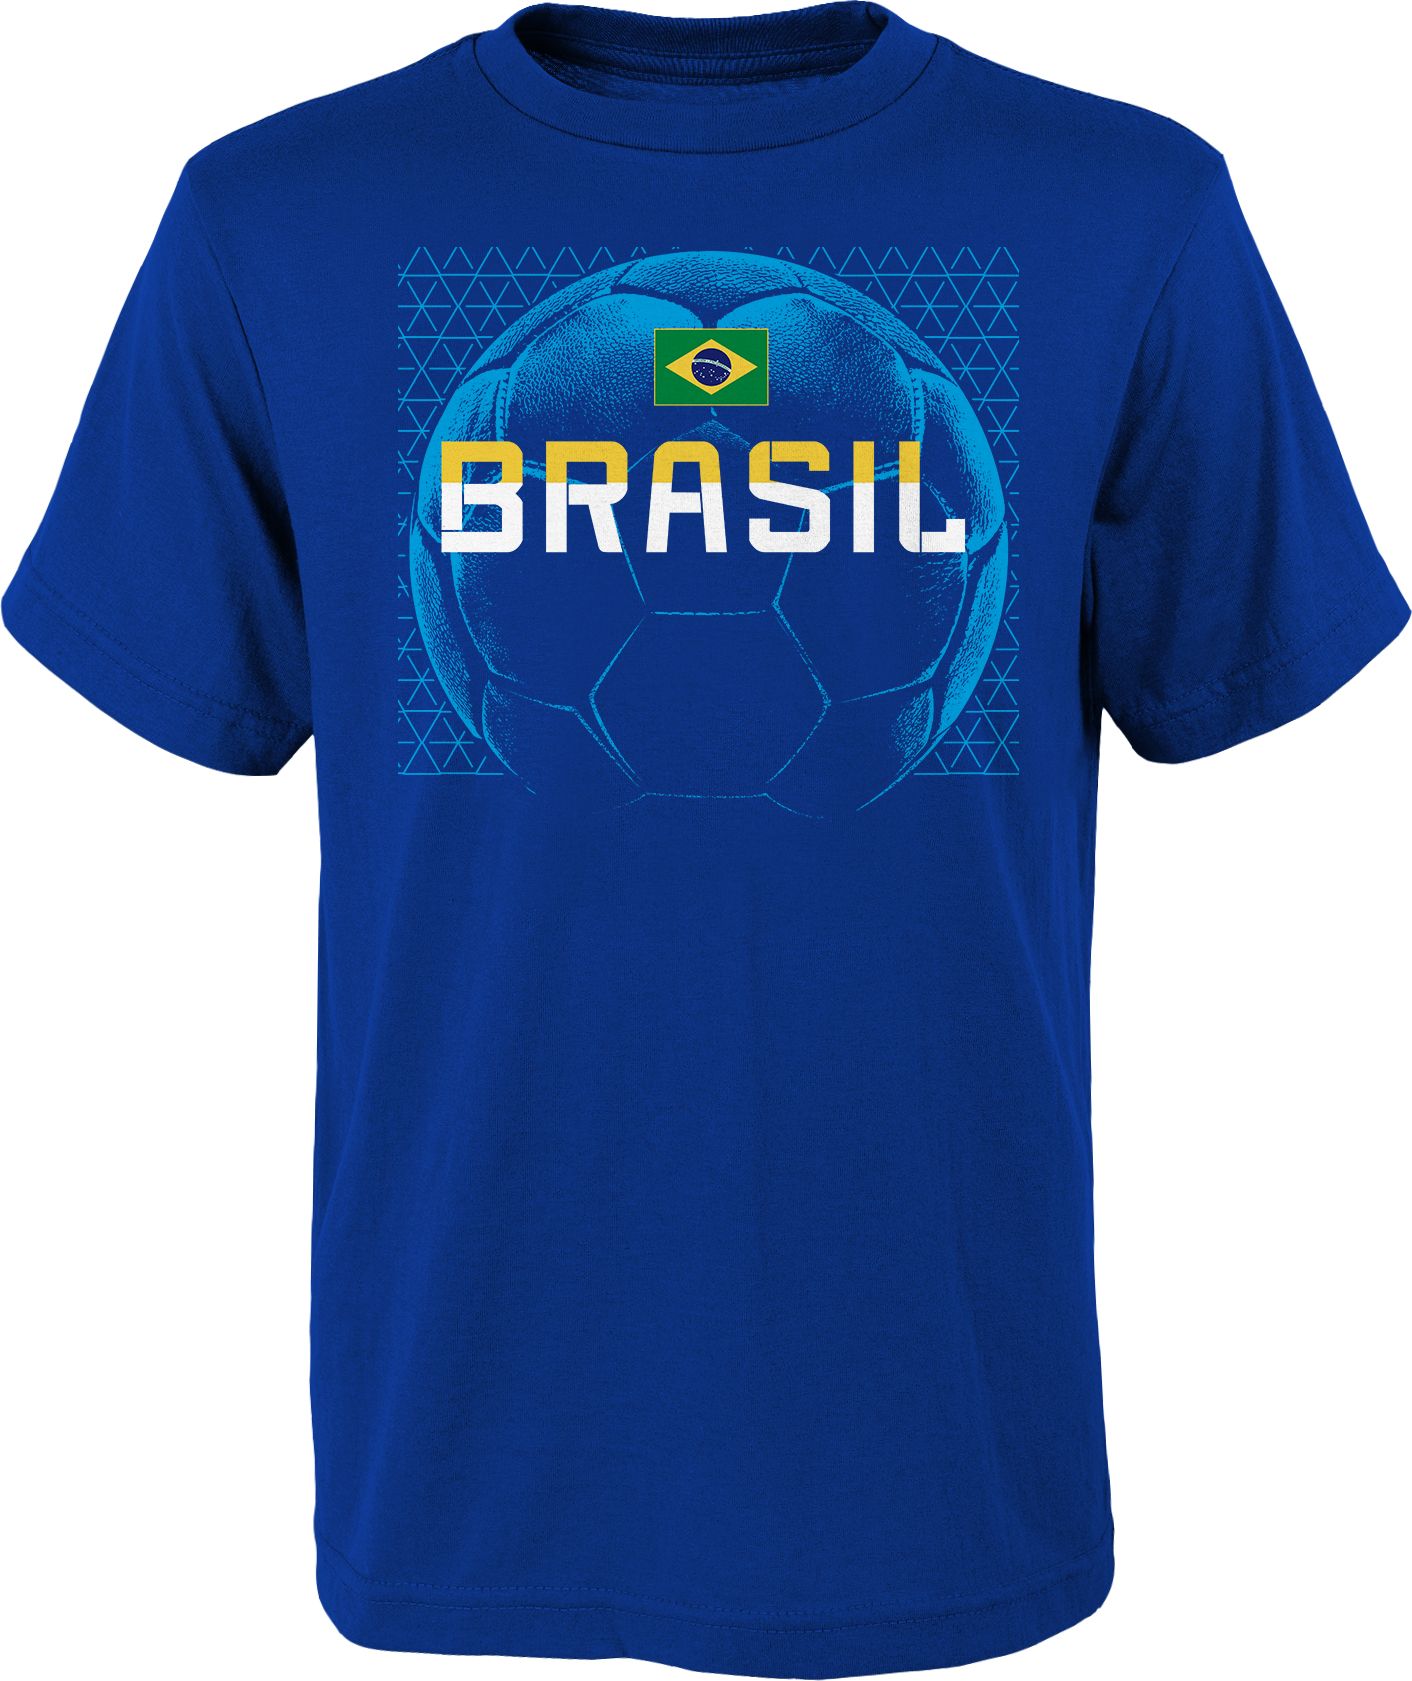 brazil soccer gear